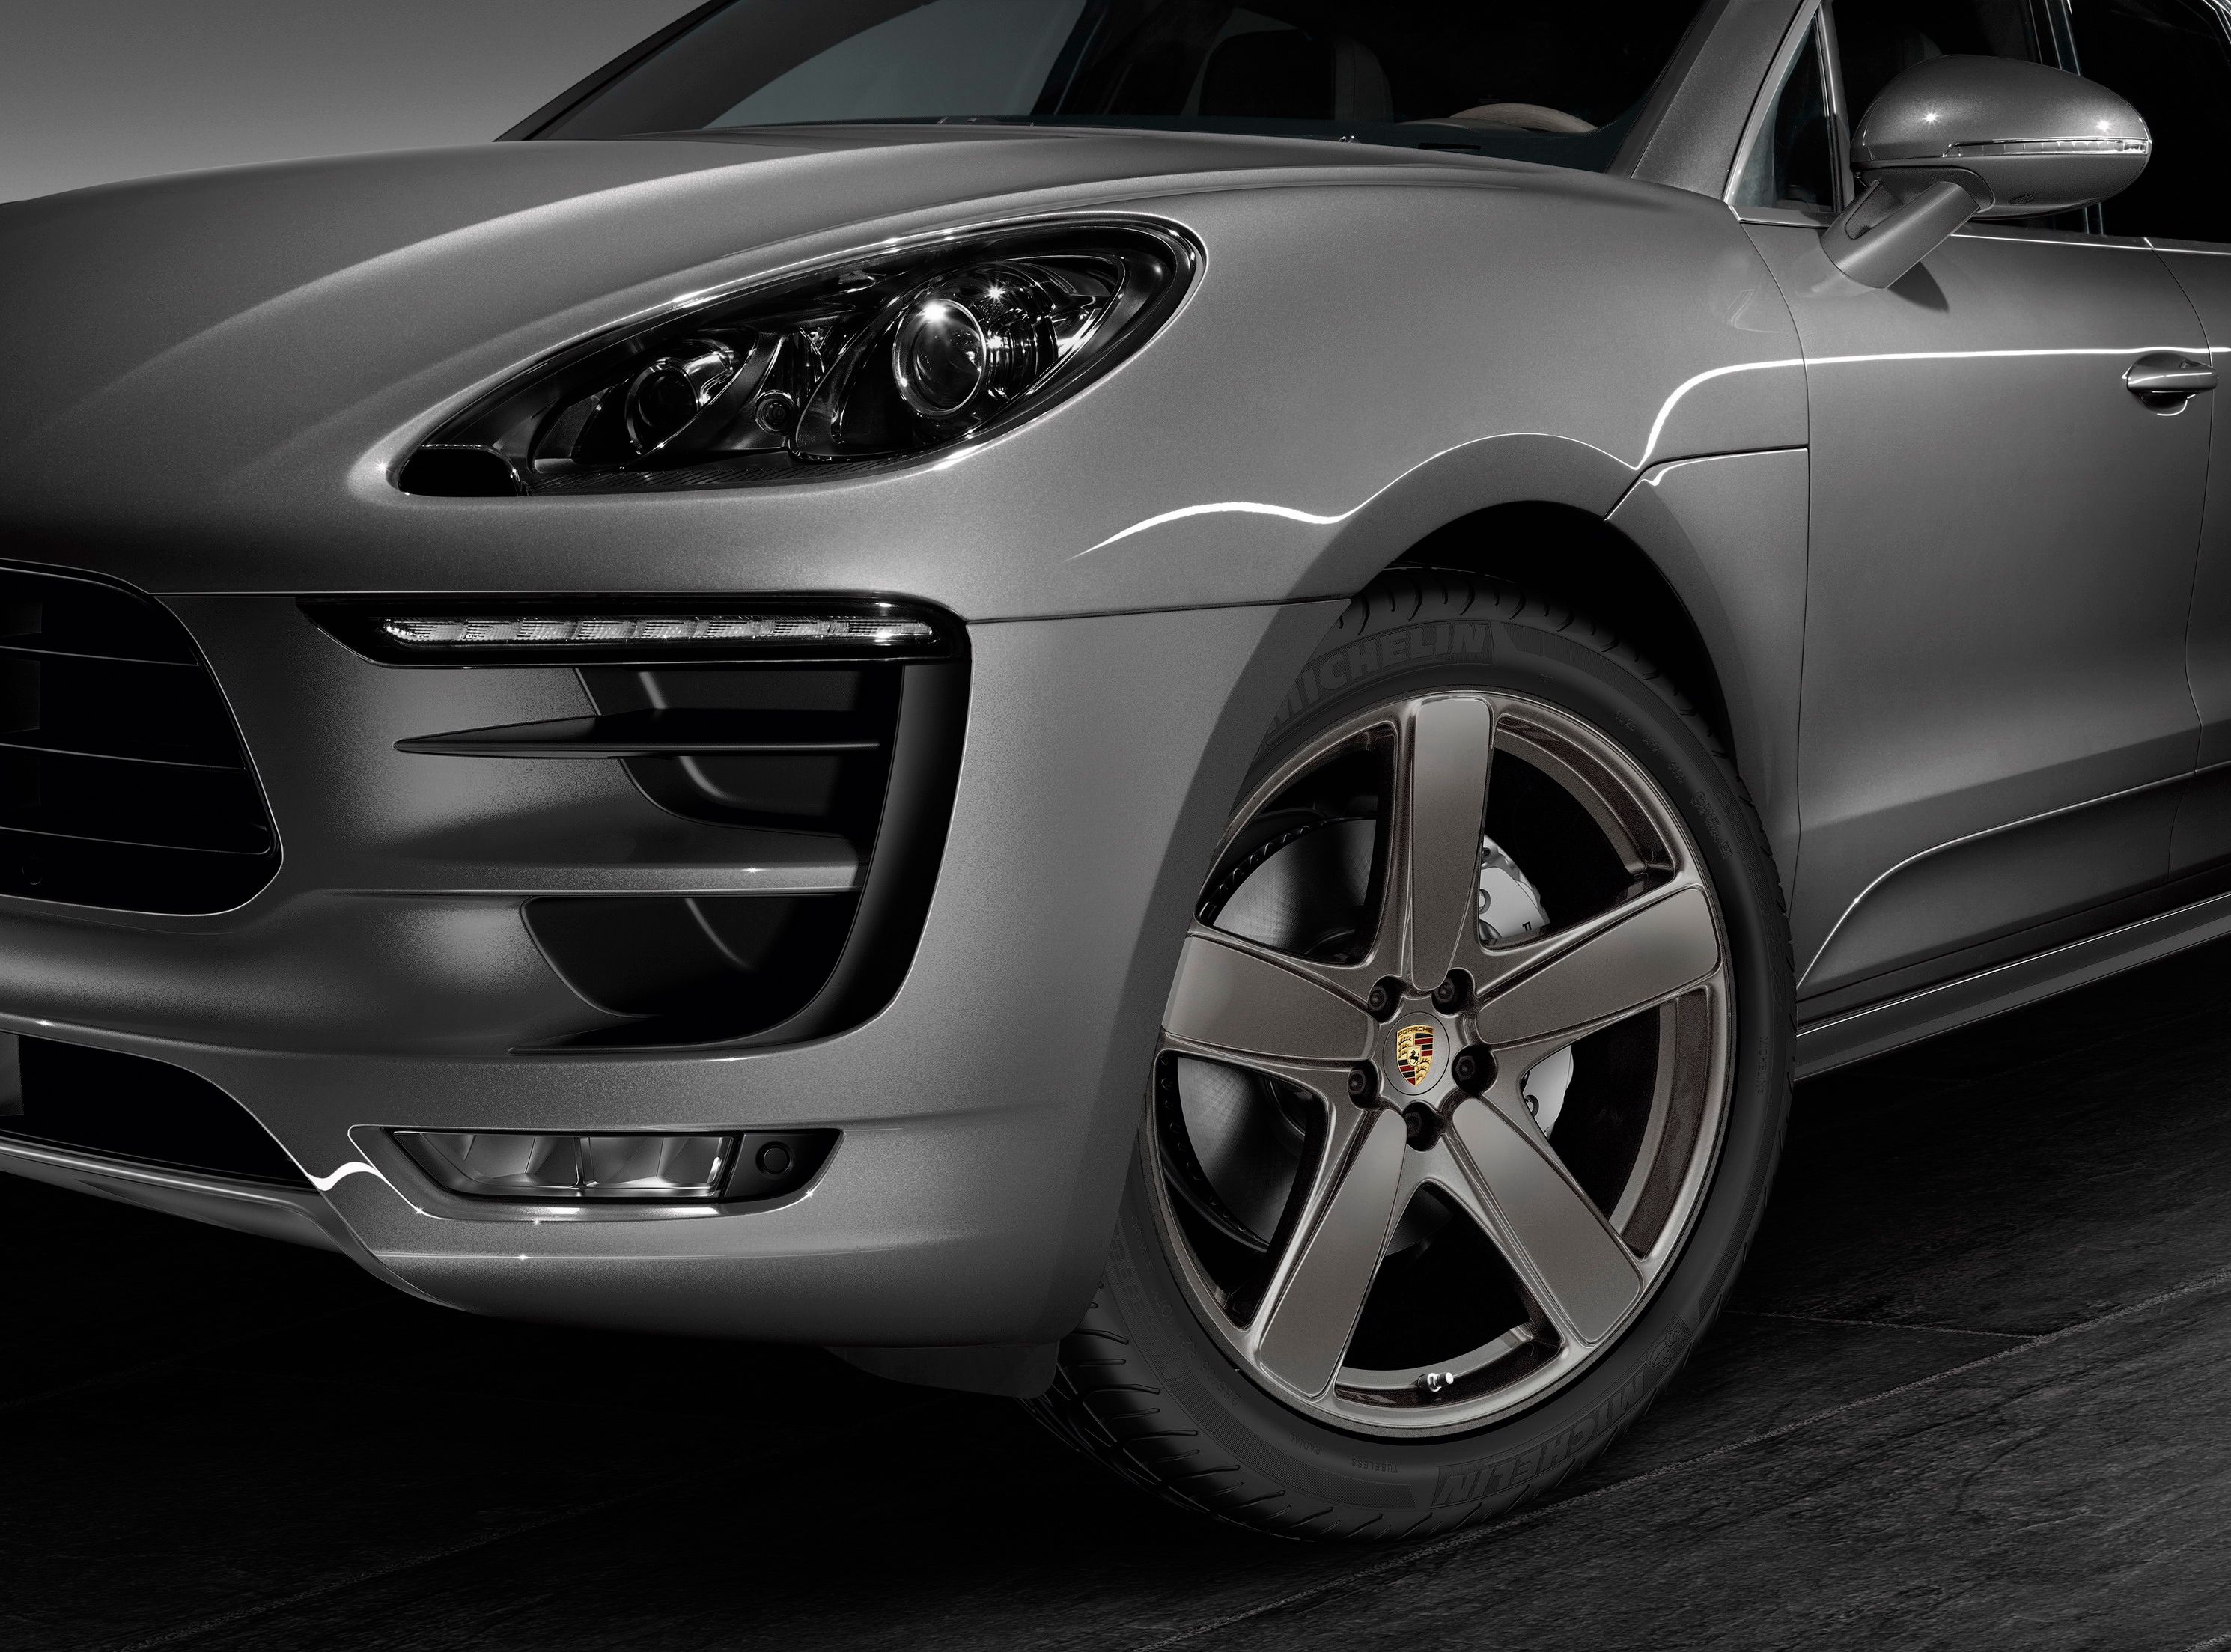 2015 Porsche Macan Sport Design by Porsche Exclusive